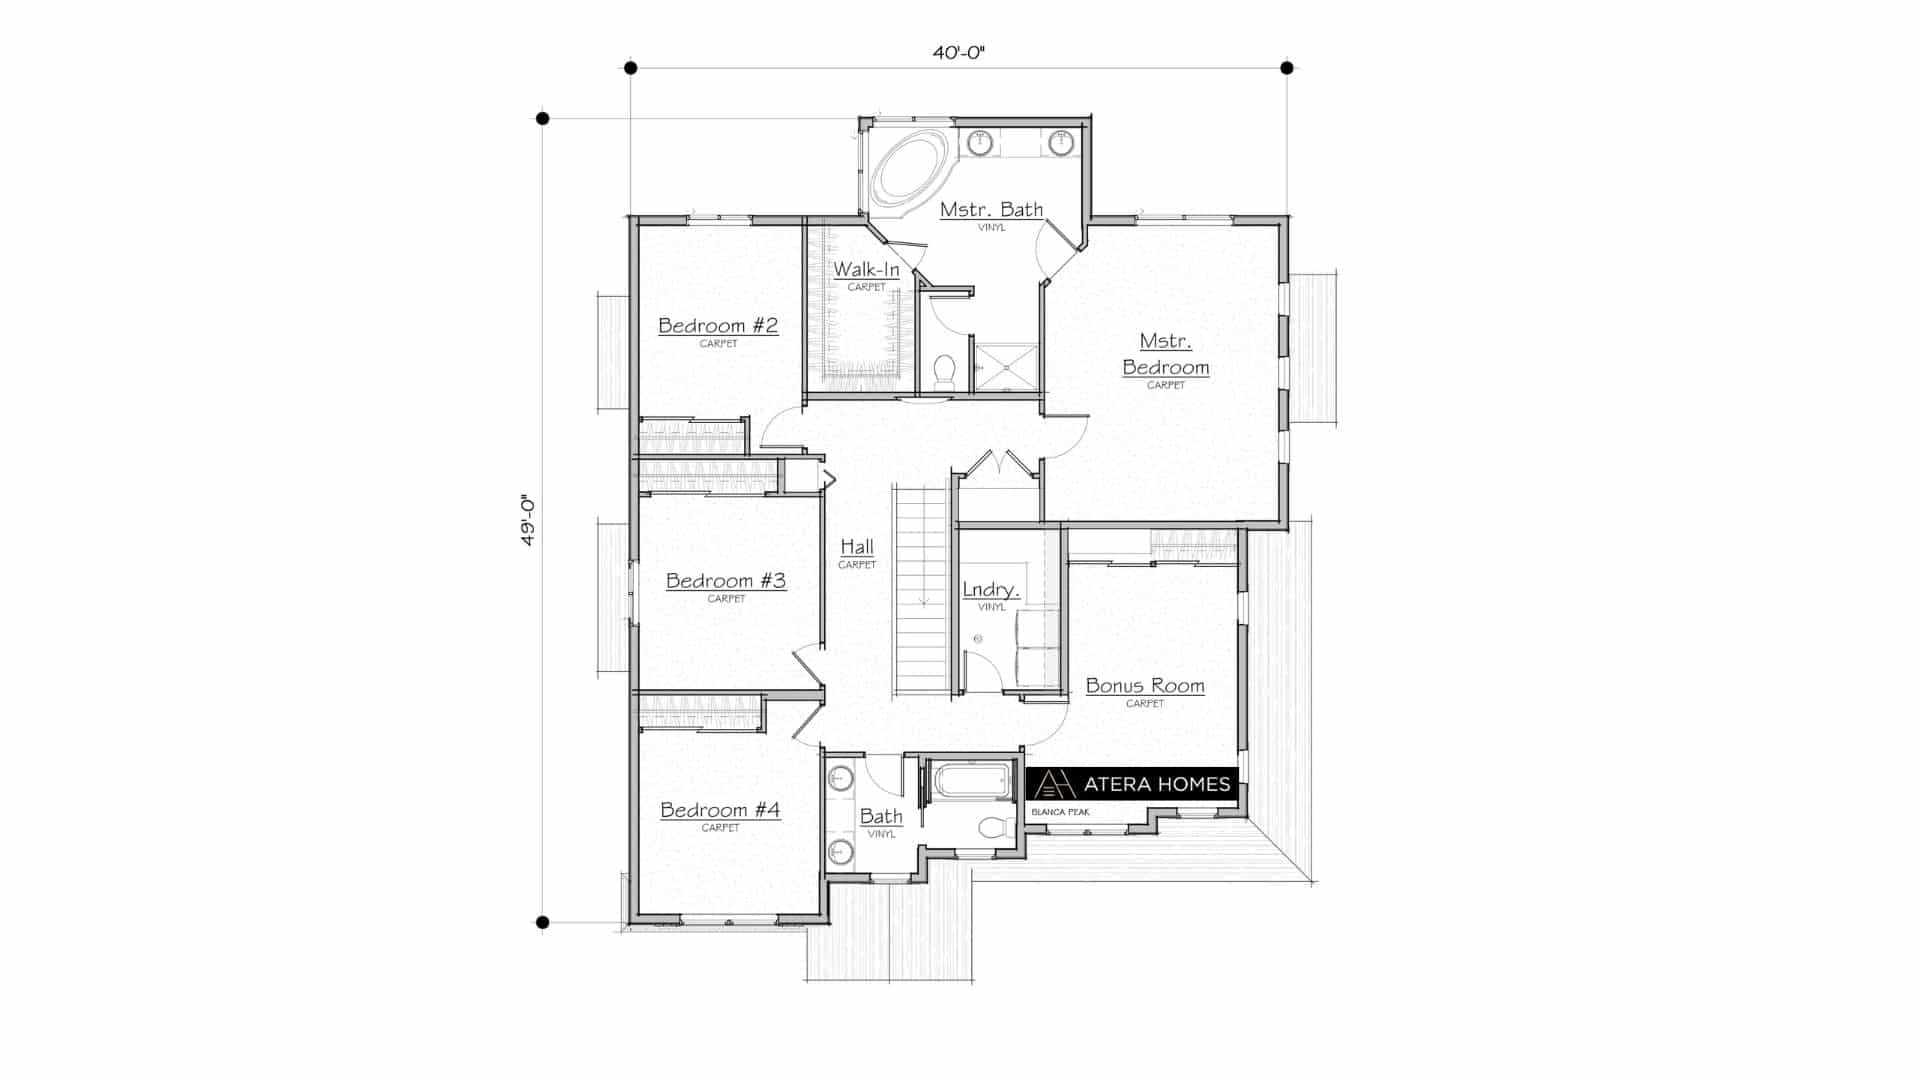 Blanca Peak IIc - Floor Plan - Level 2